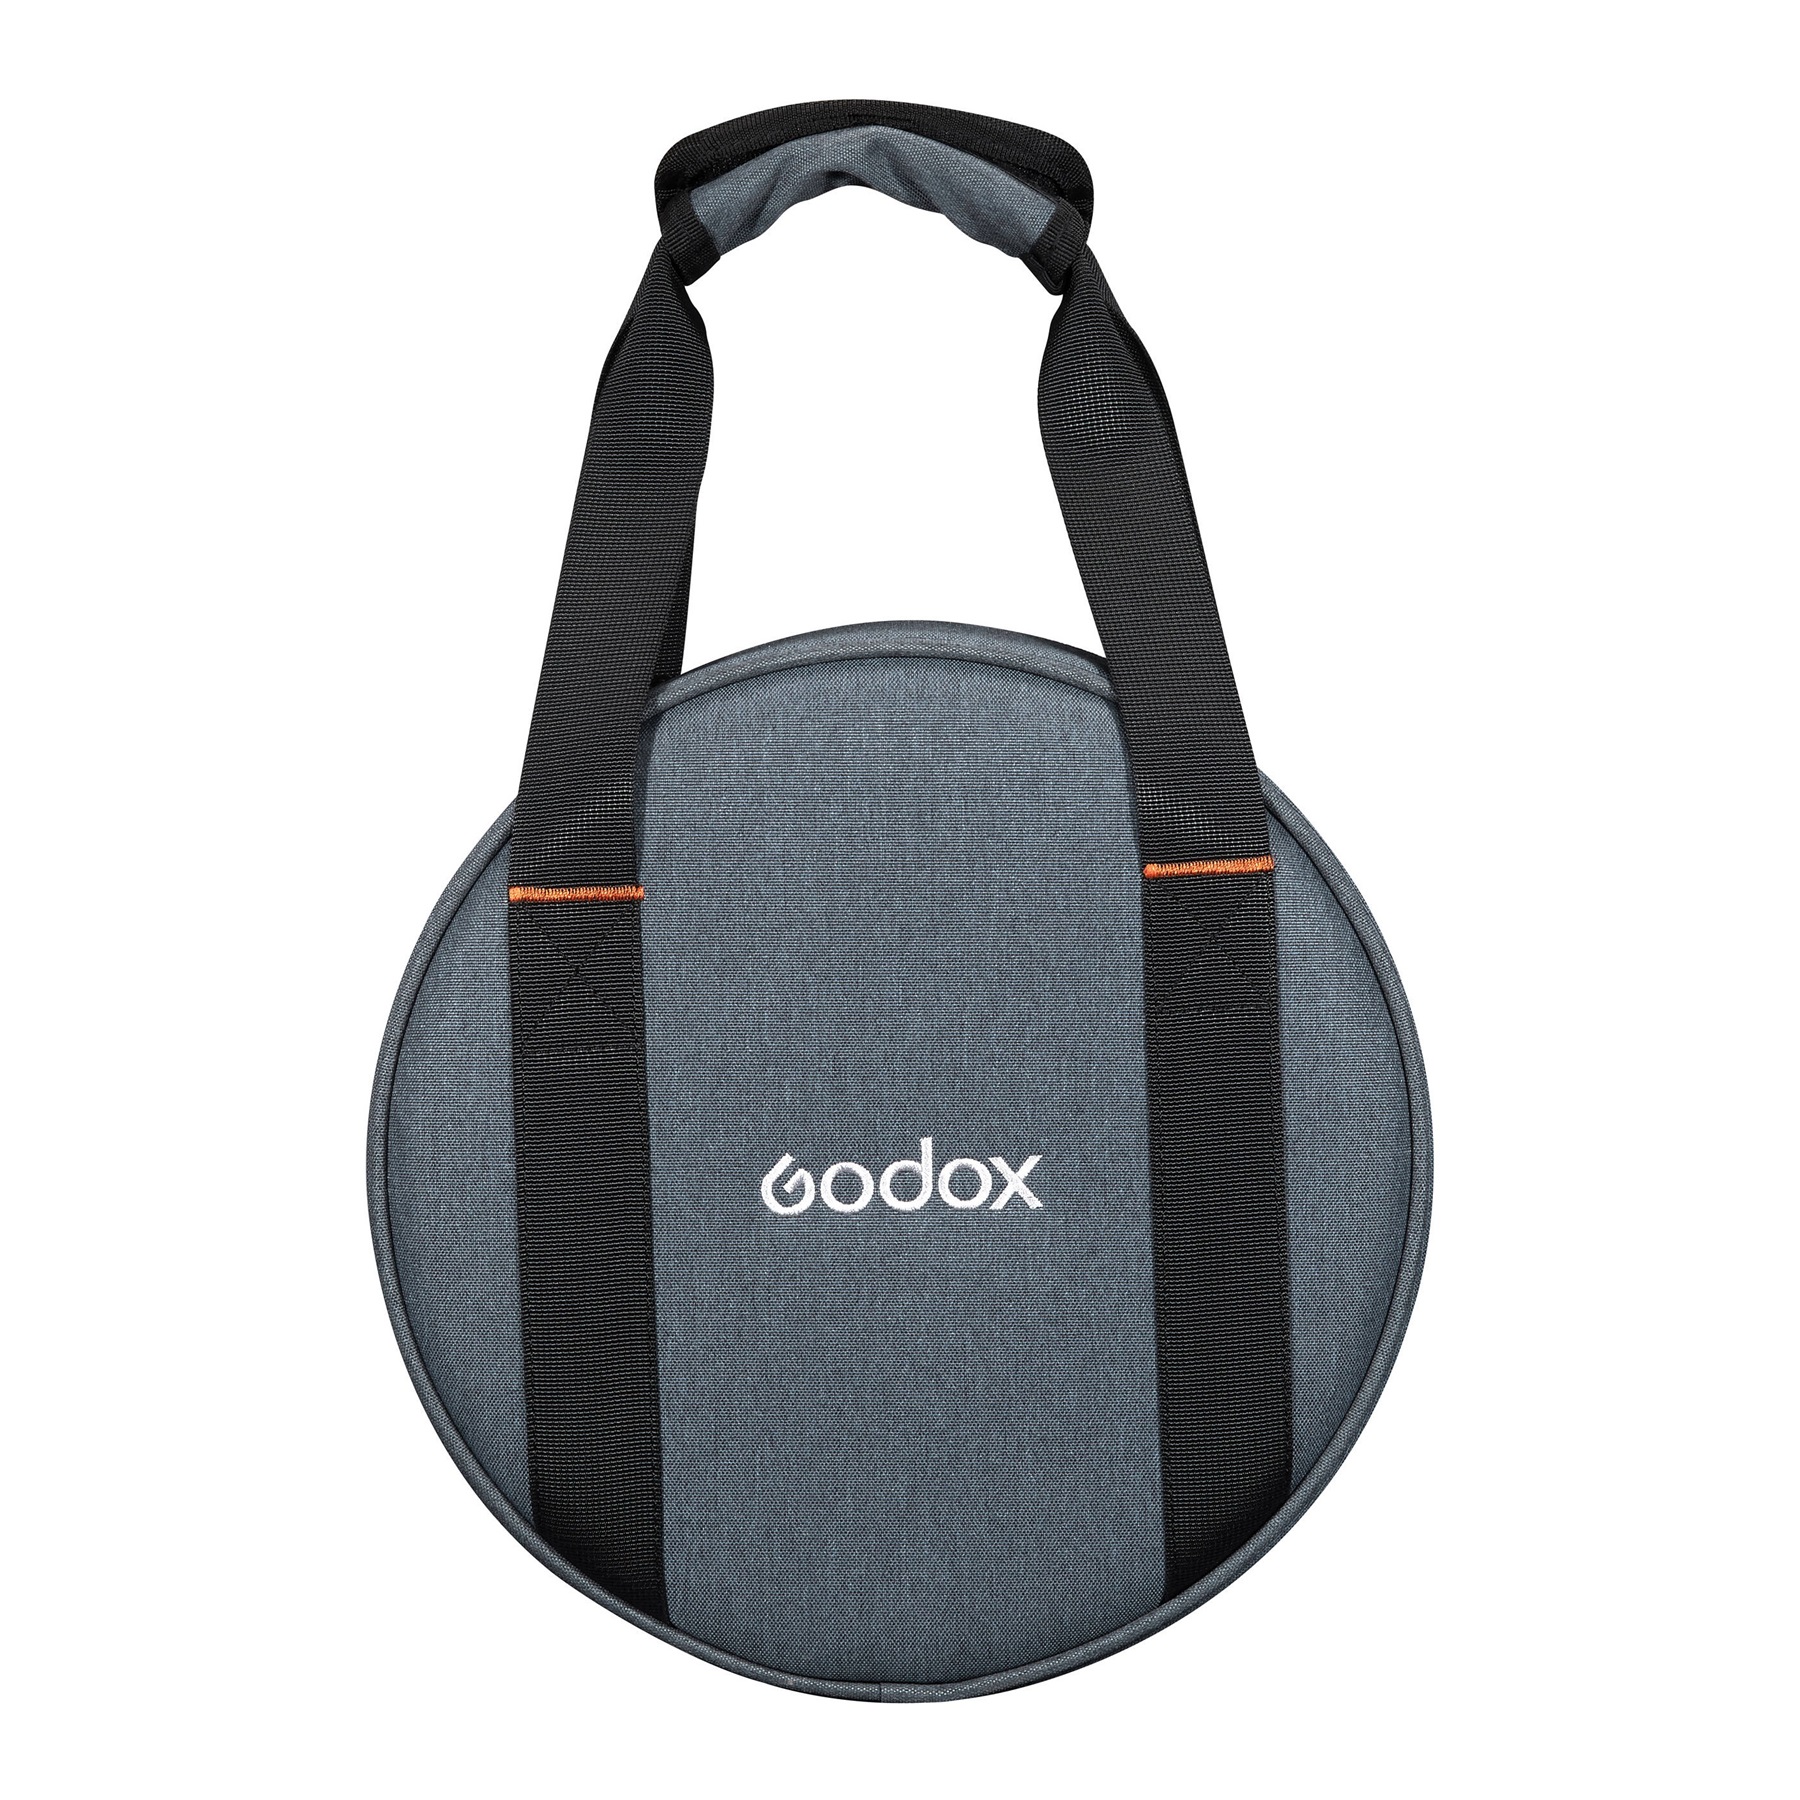    Godox FLS5     Godox   Ultra-mart